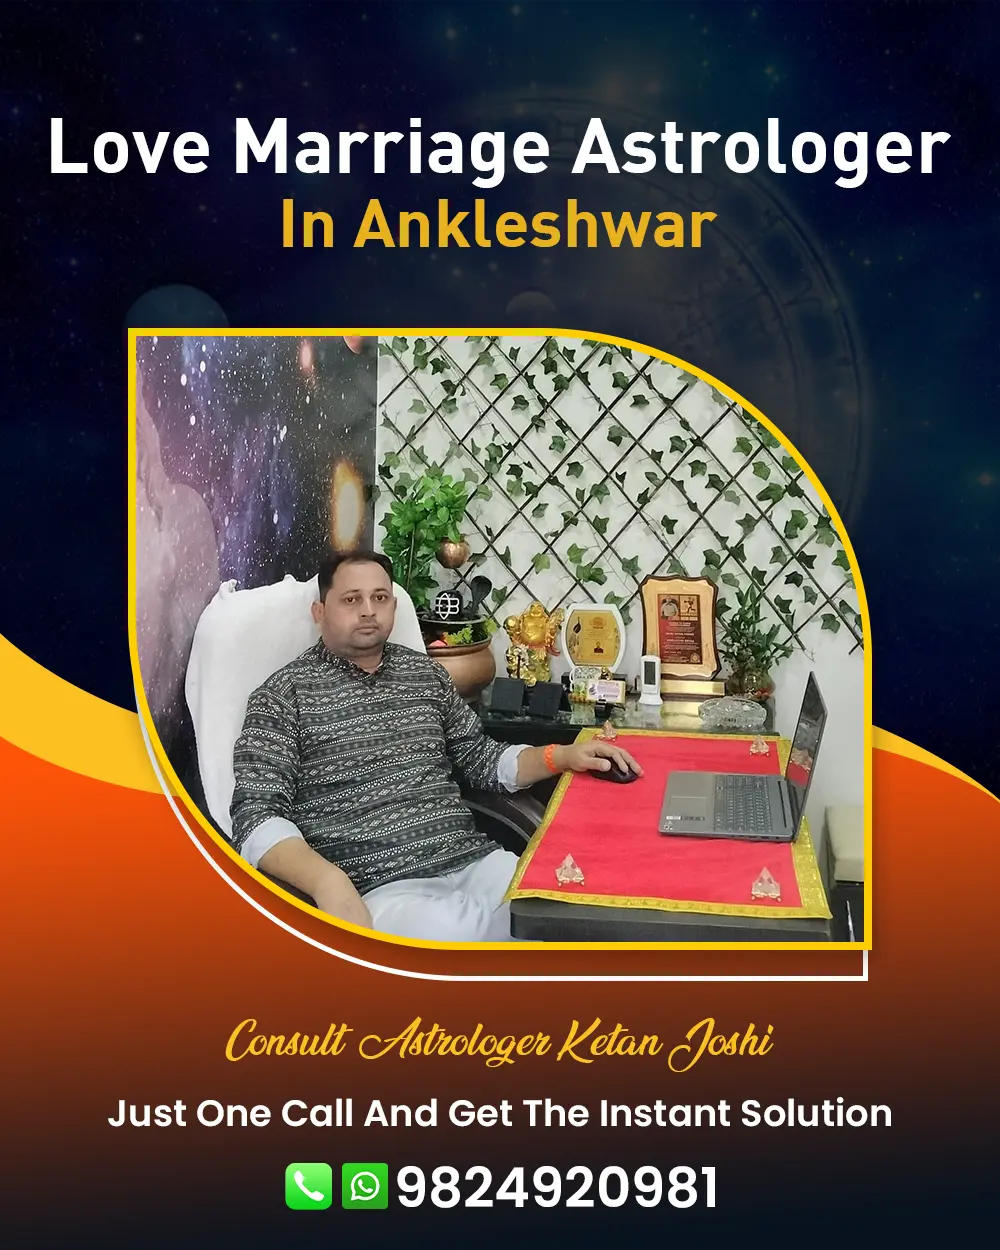 Love Marriage Astrologer In Ankleshwar